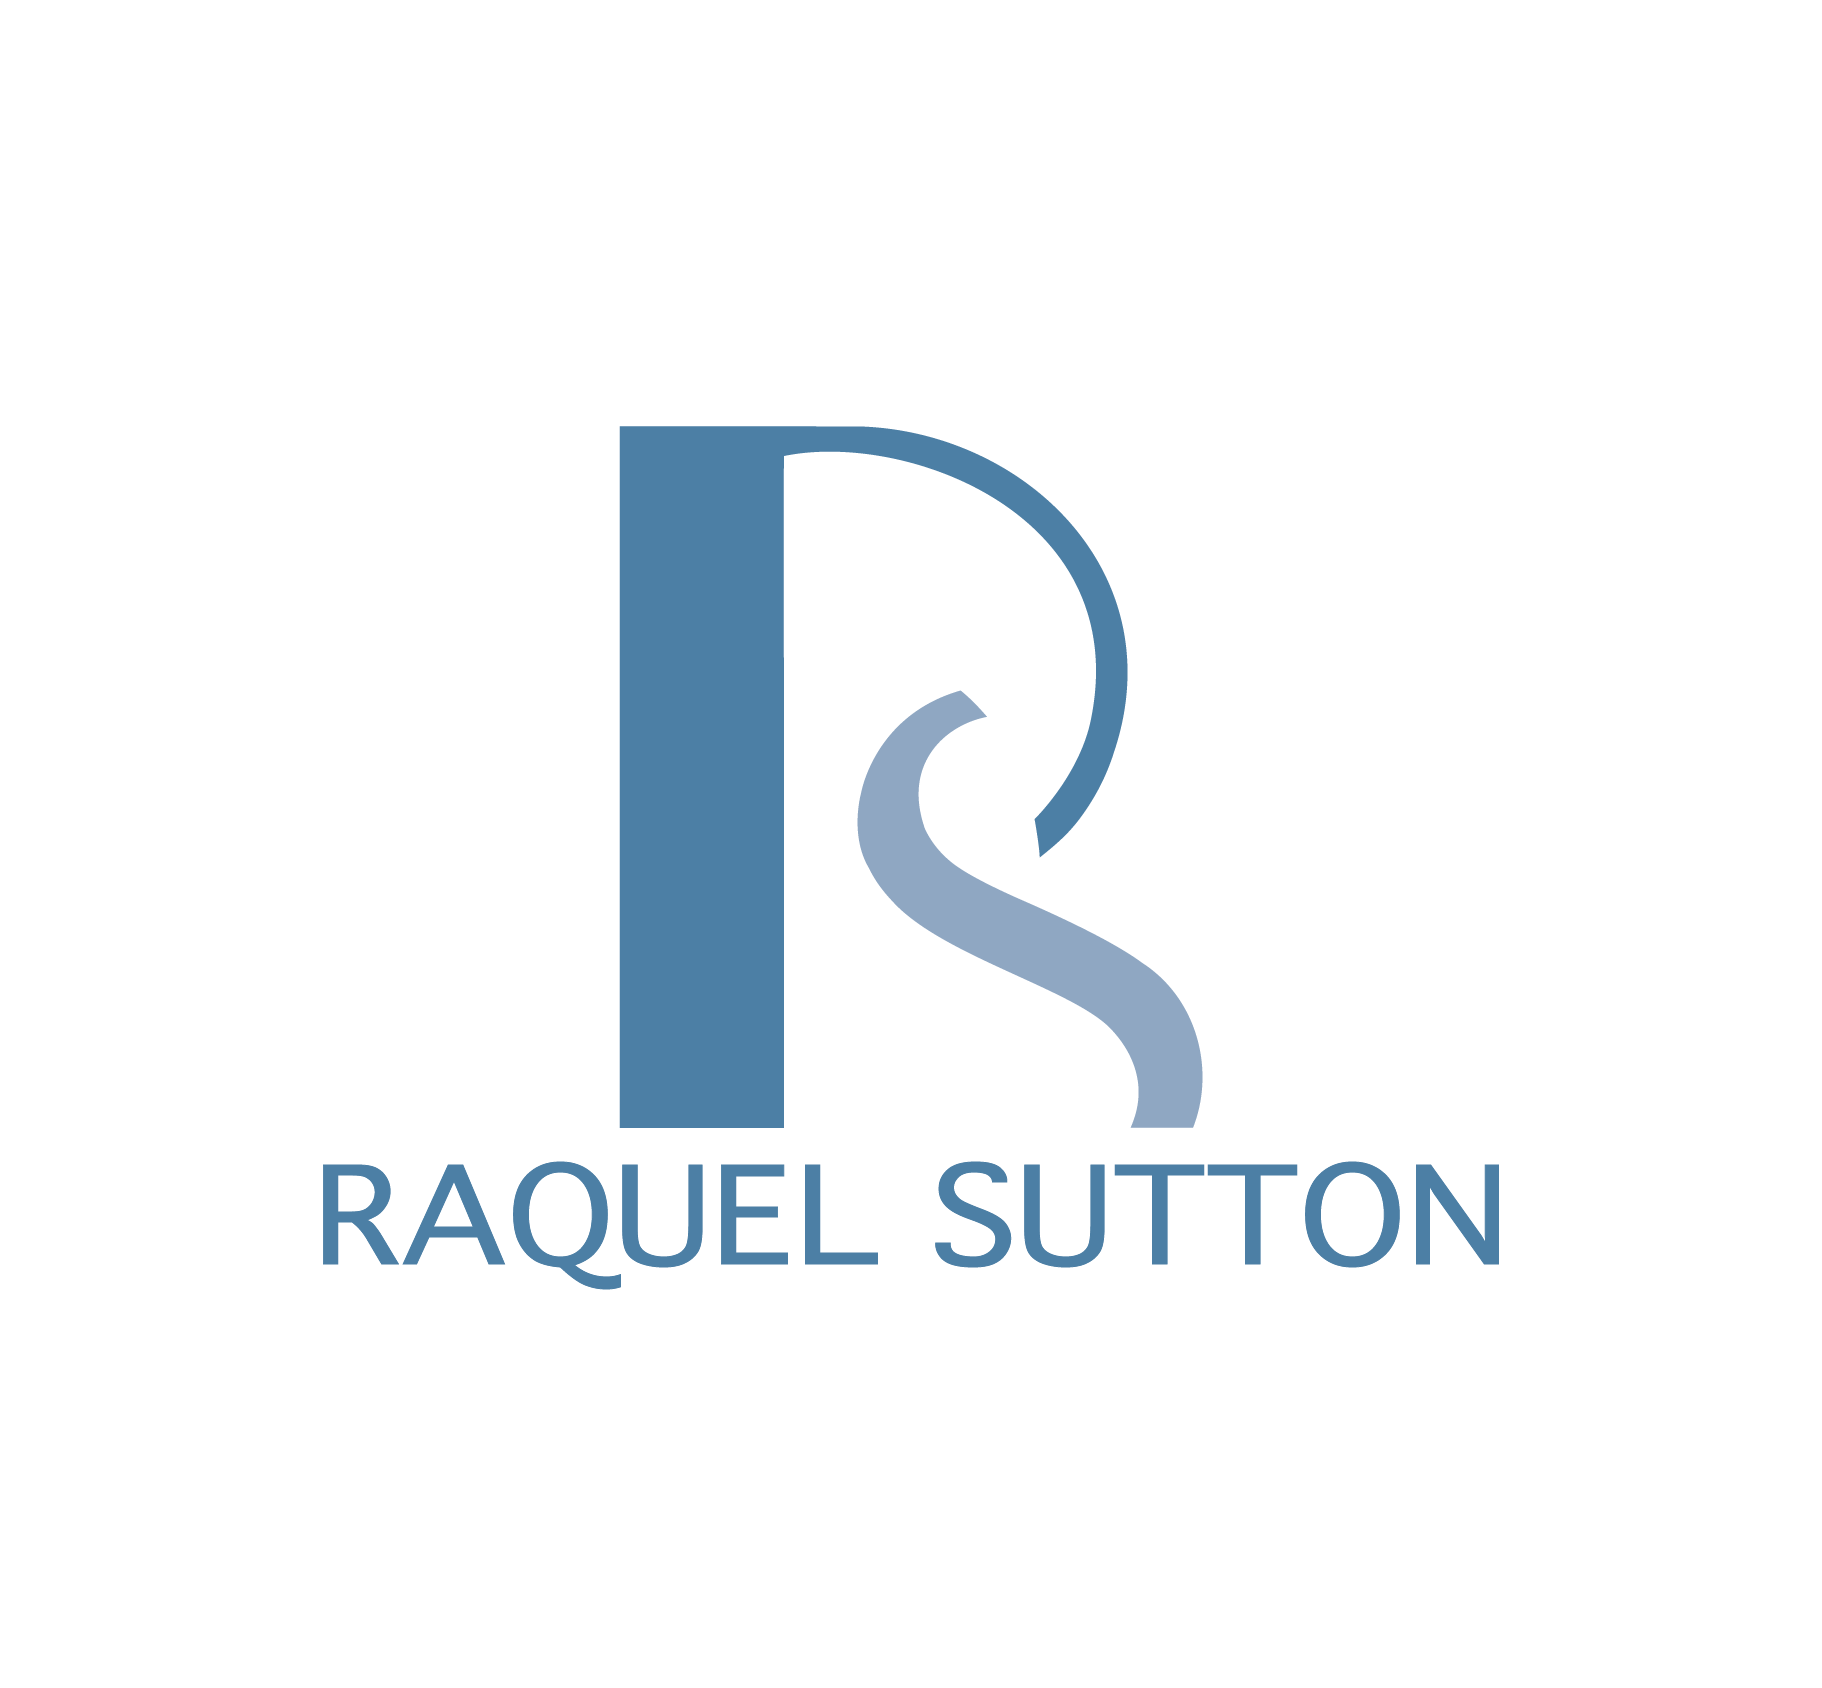 Raquel Sutton